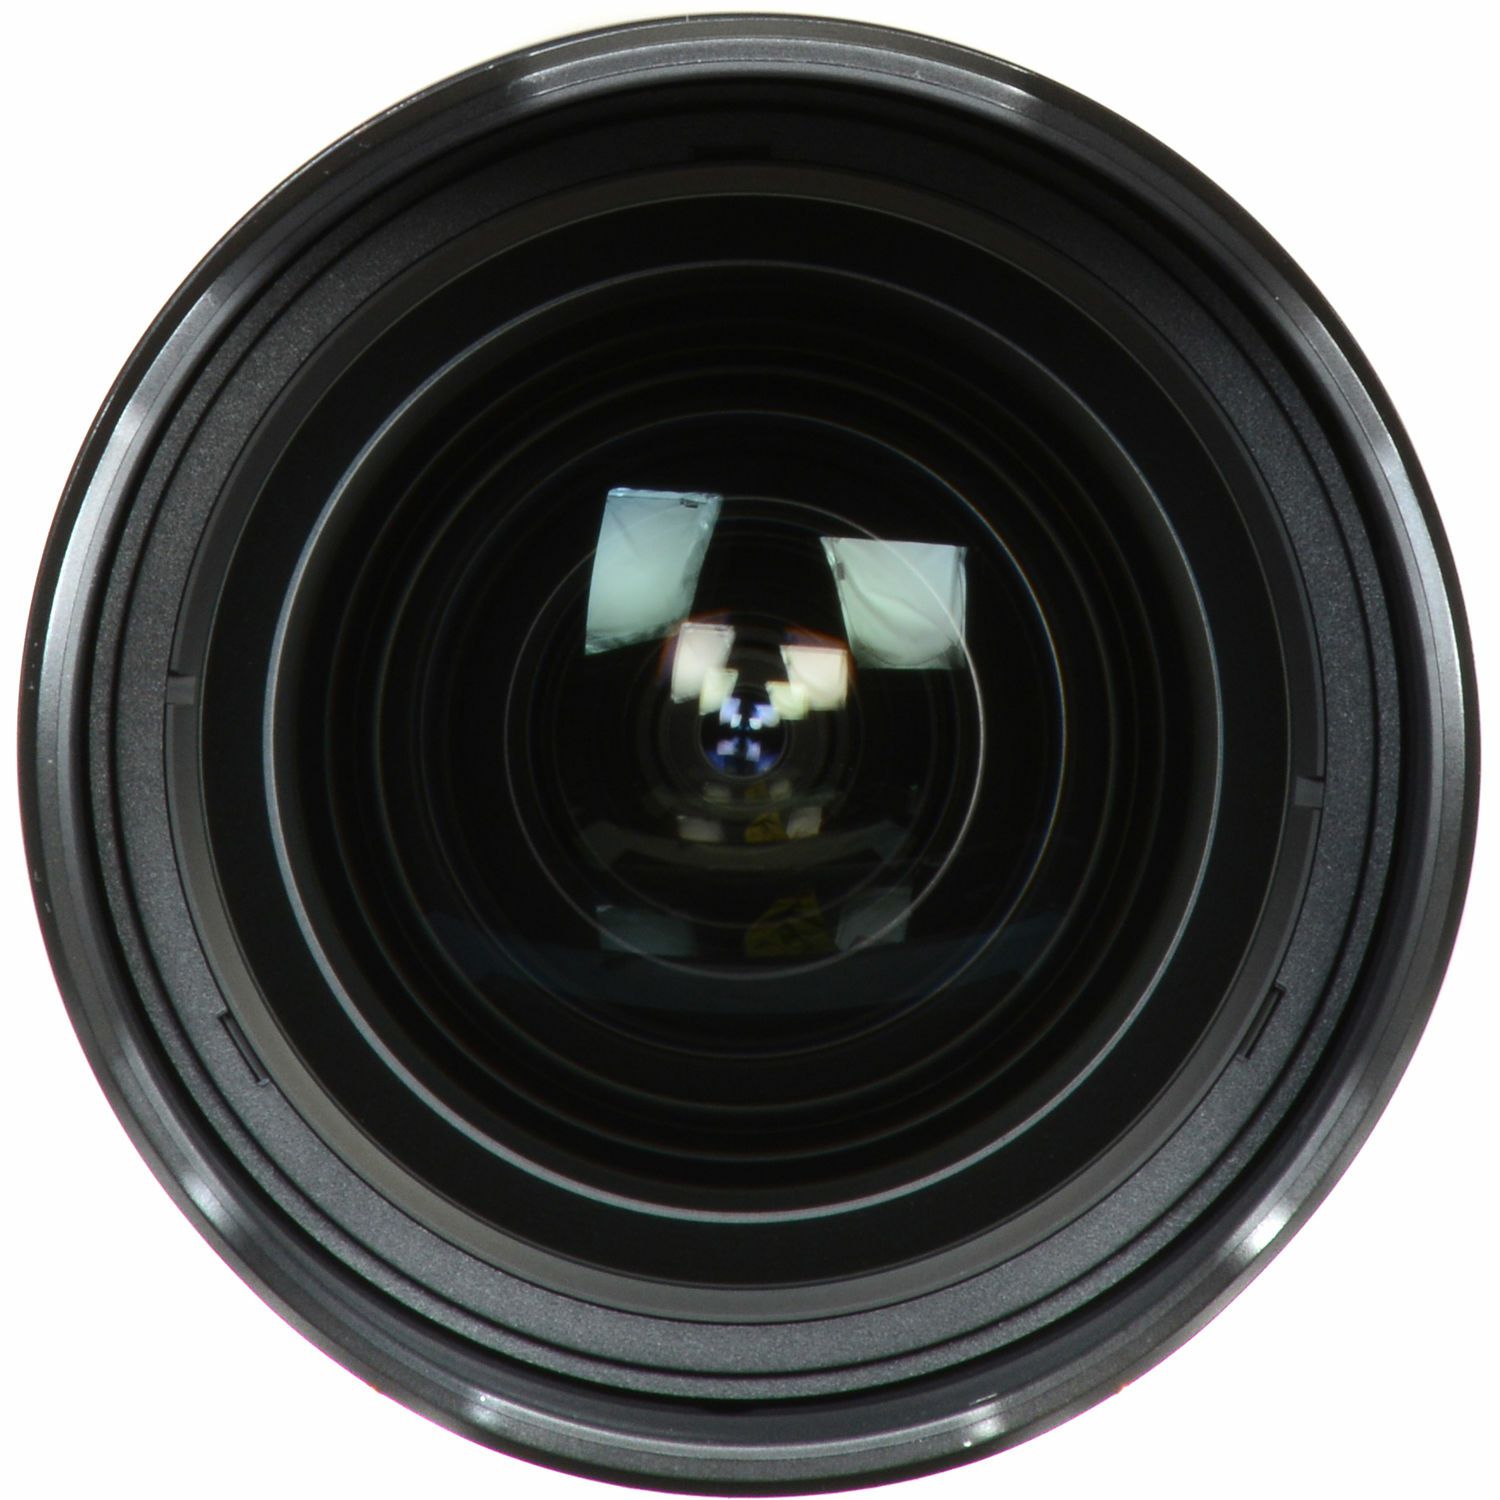 Olympus M. Zuiko Digital 7-14mm f/2.8 ED PRO širokokutni objektiv 7-14 1:2.8 f2.8 2.8 wide angle zoom lens Micro Four Thirds MFT micro4/3" (V313020BW000)